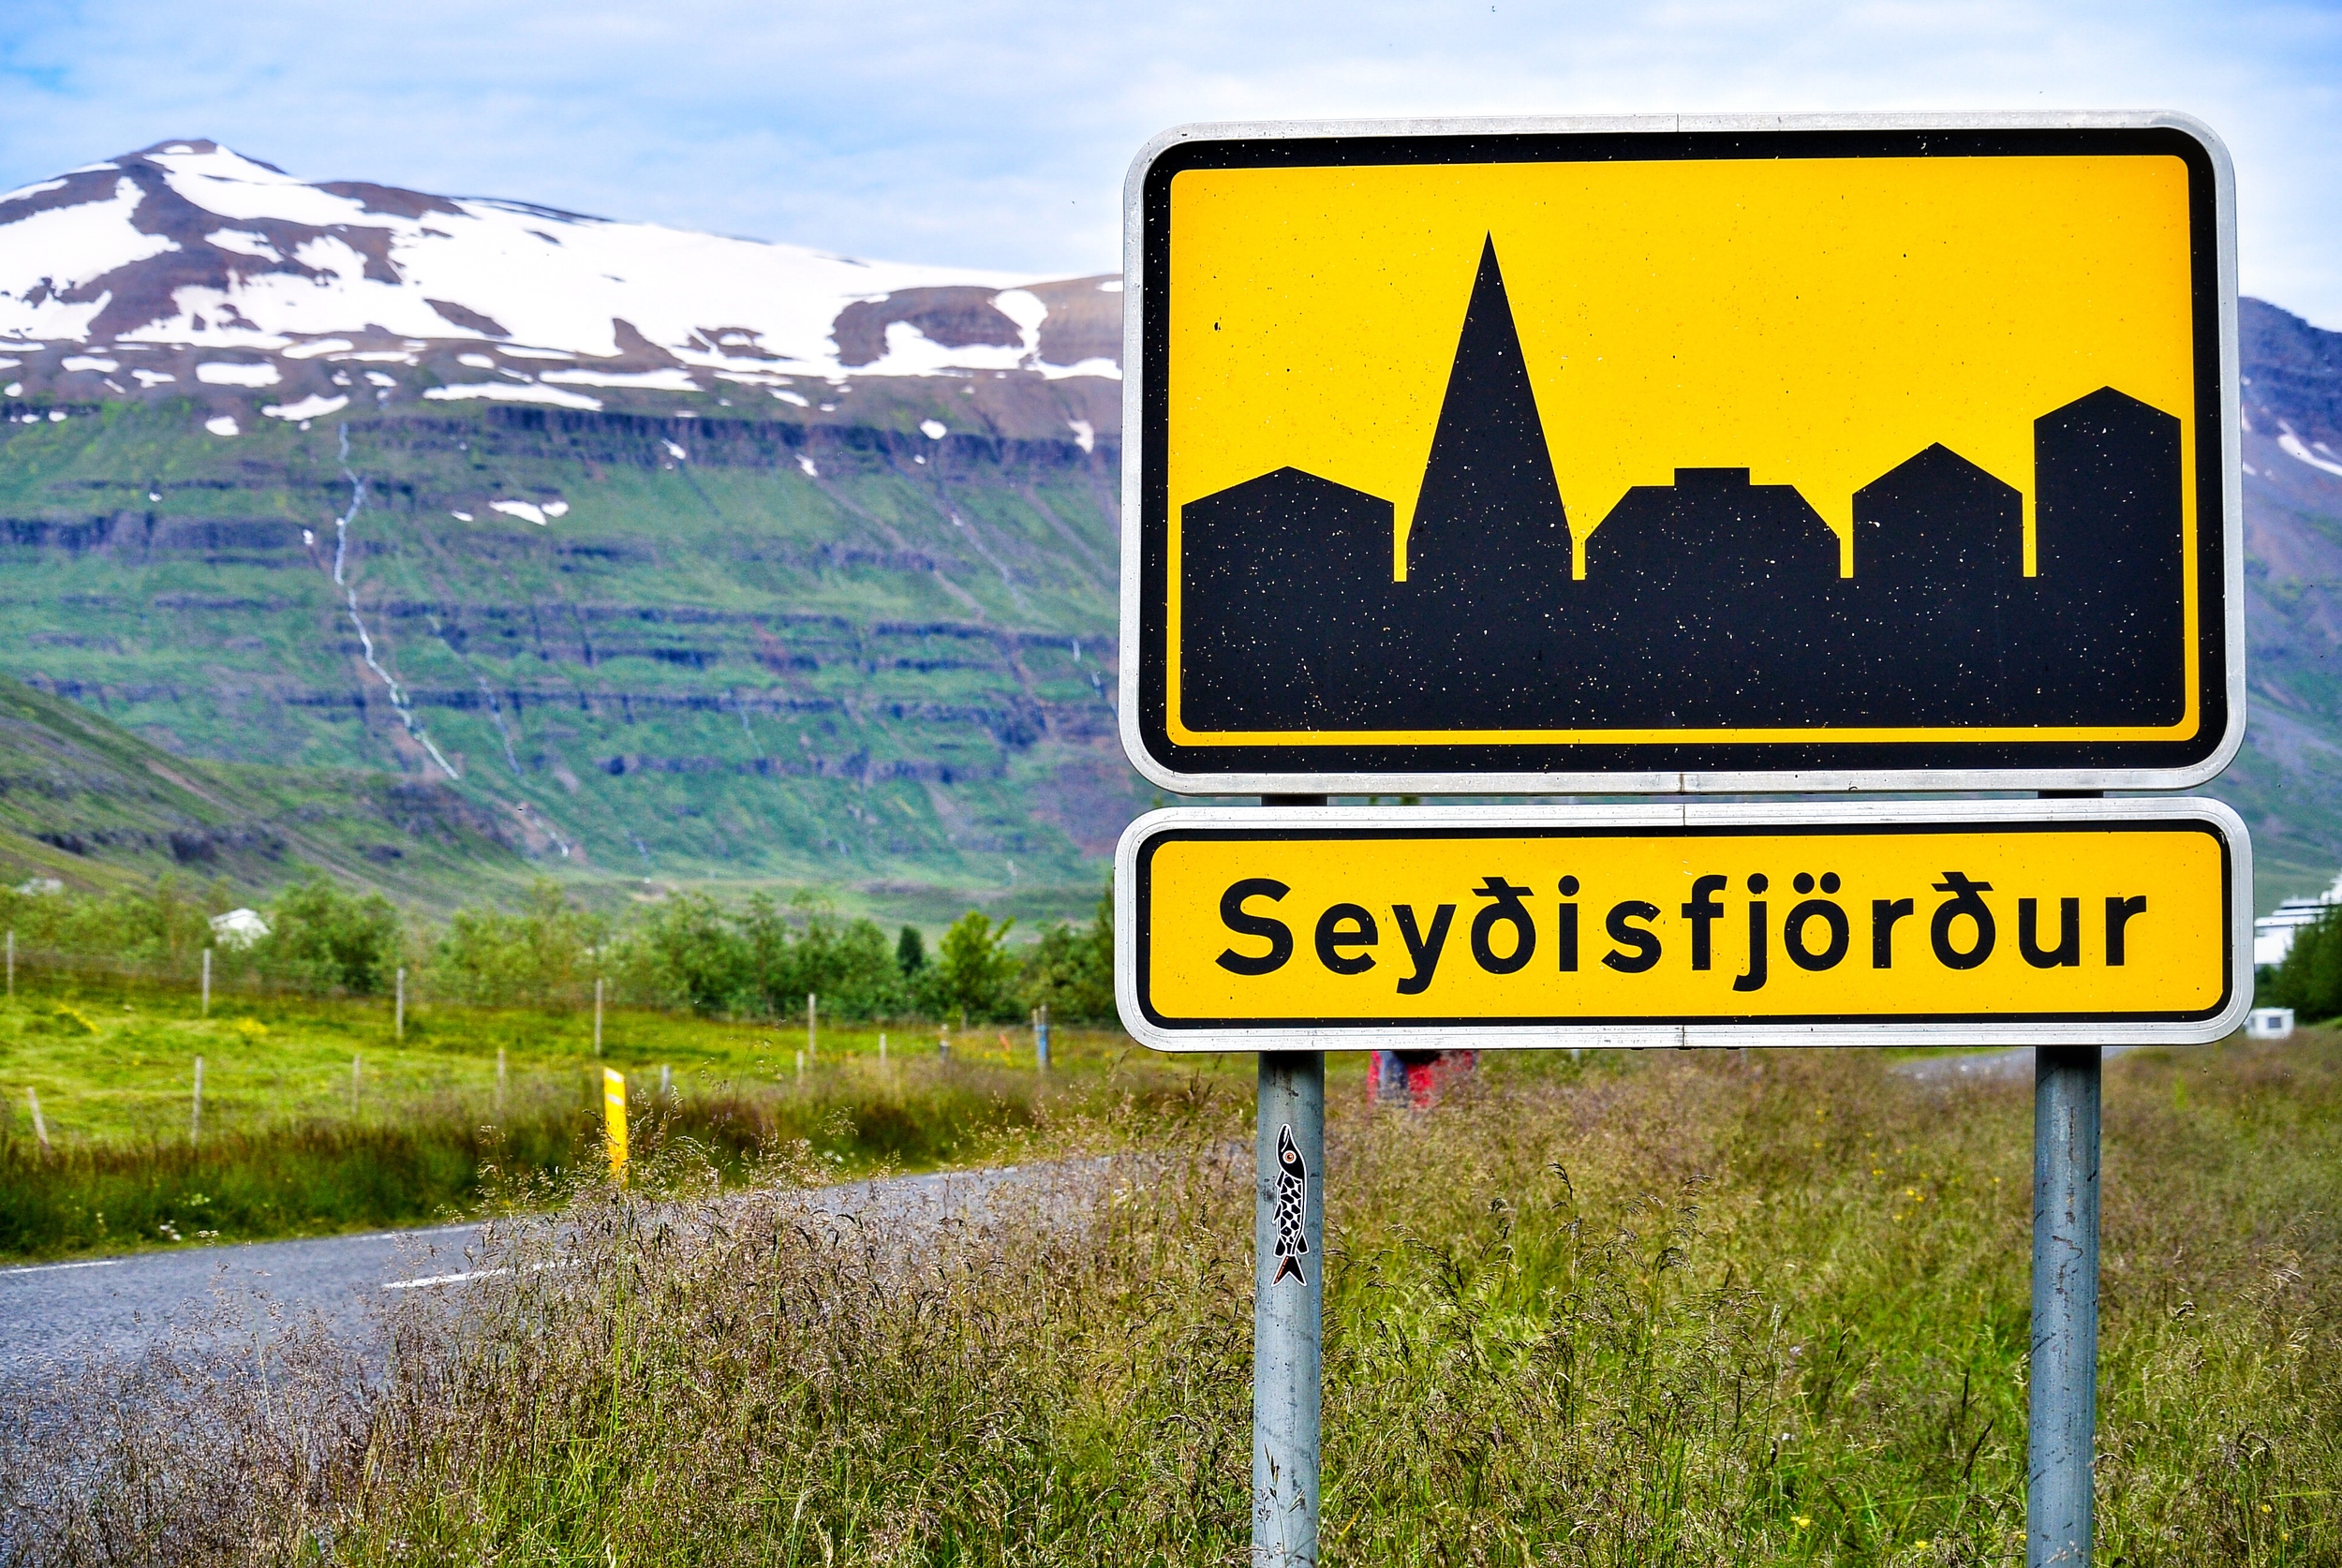 Getting Off the Beaten Track in Seyðisfjörður, Iceland